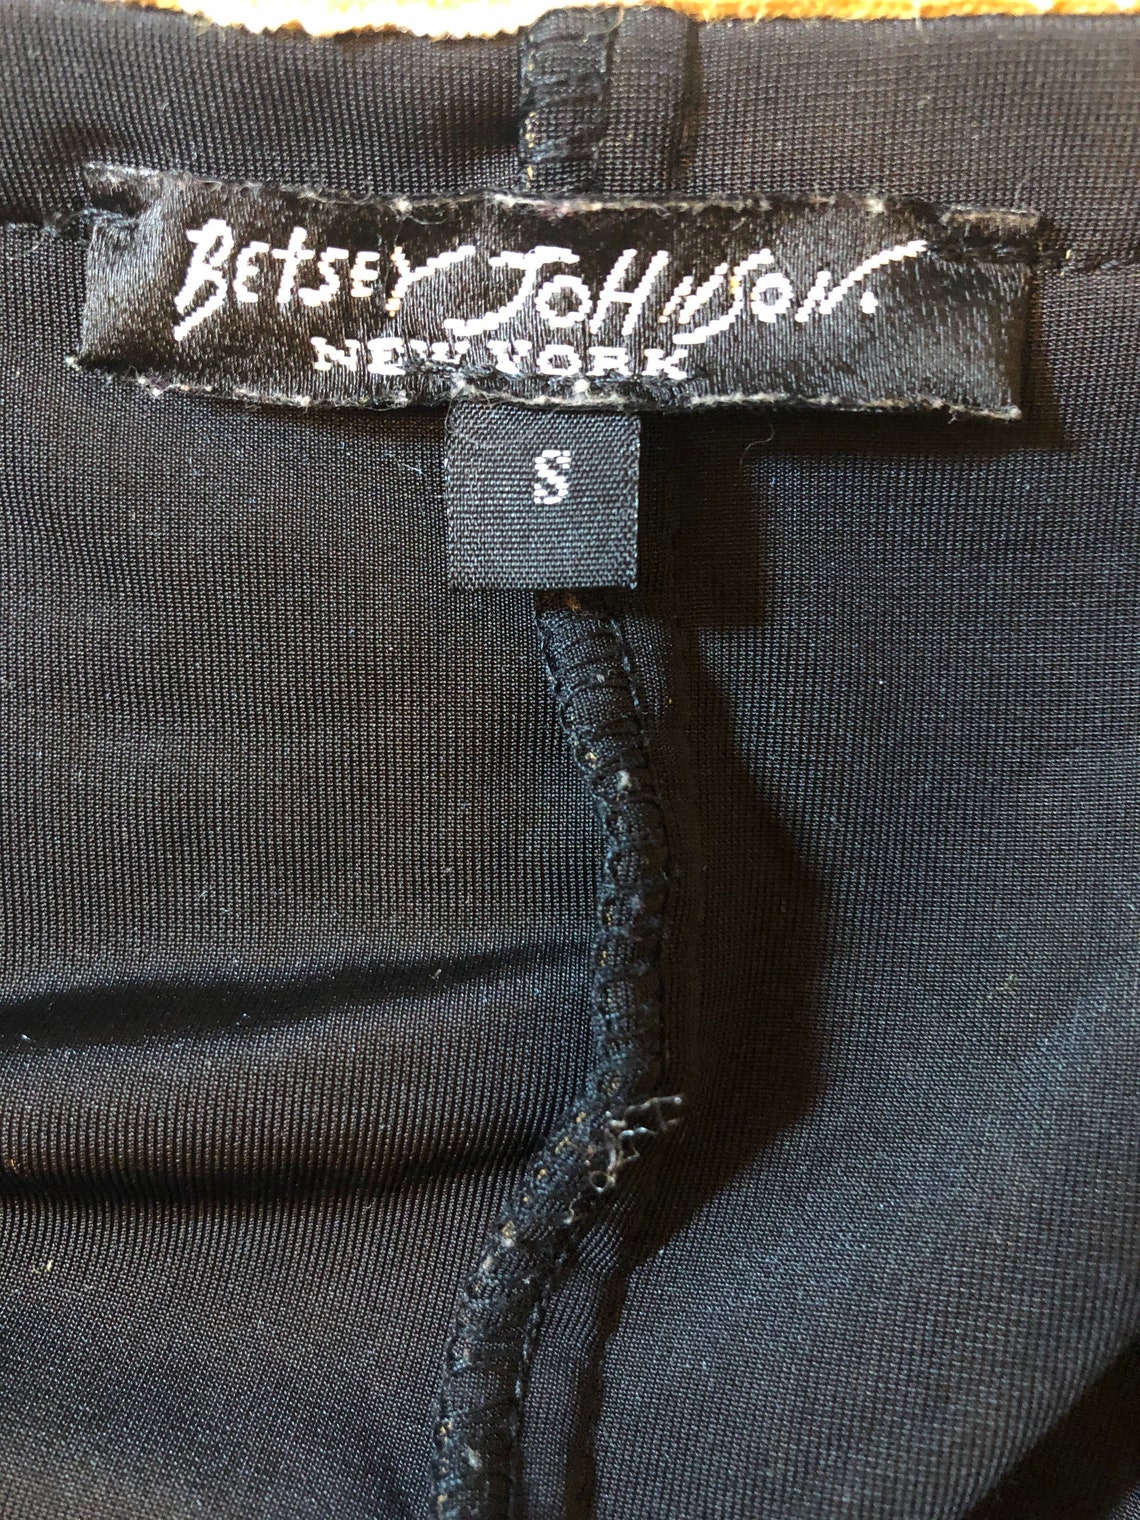 Vintage Betsey Johnson New York Label Black Velvet Fur Trim | Etsy